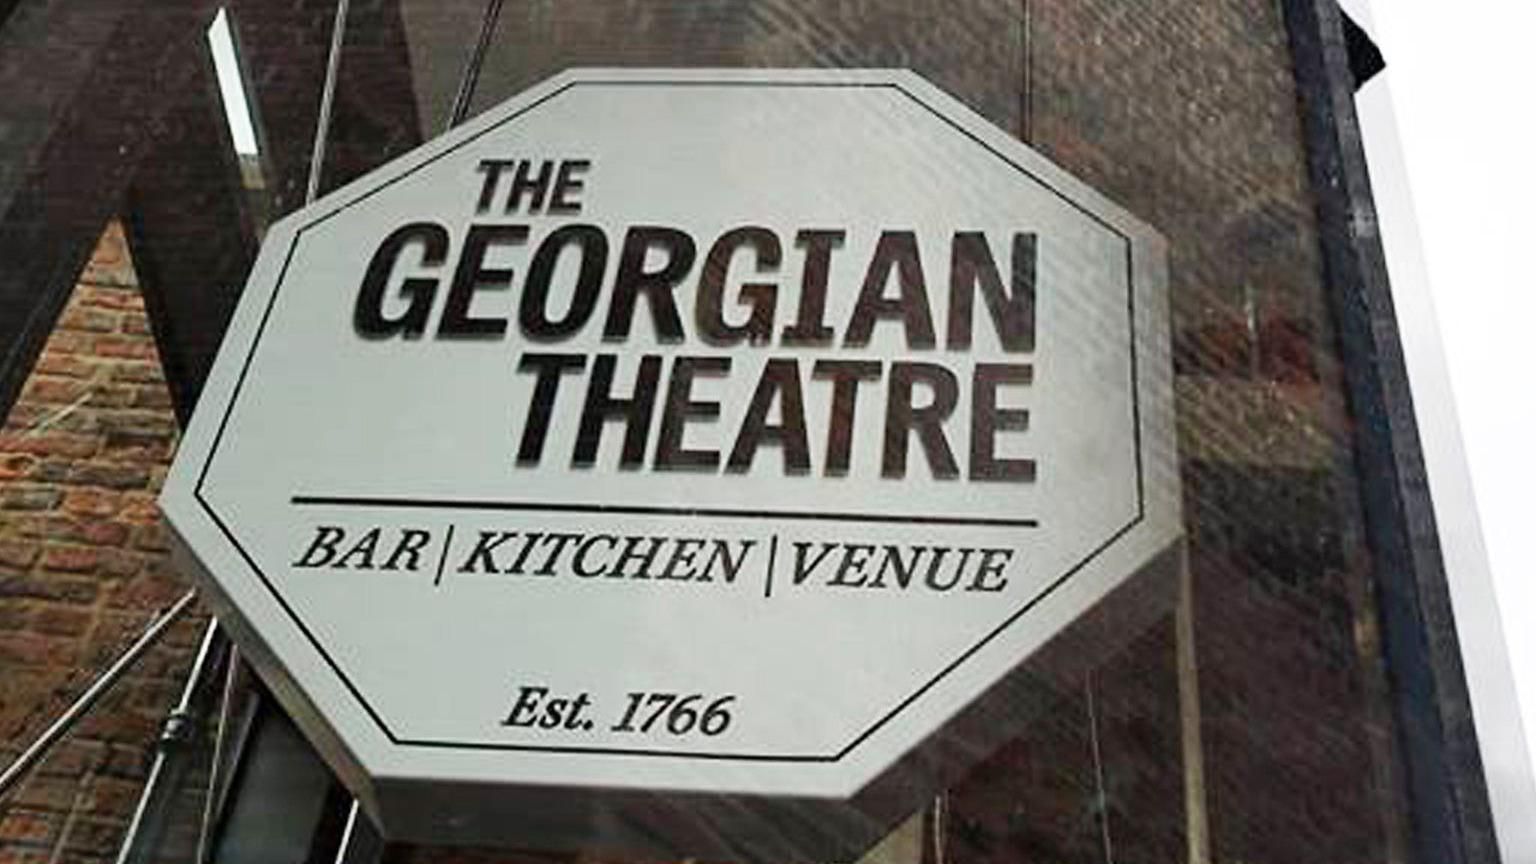 Signage at the Georgian Theatre